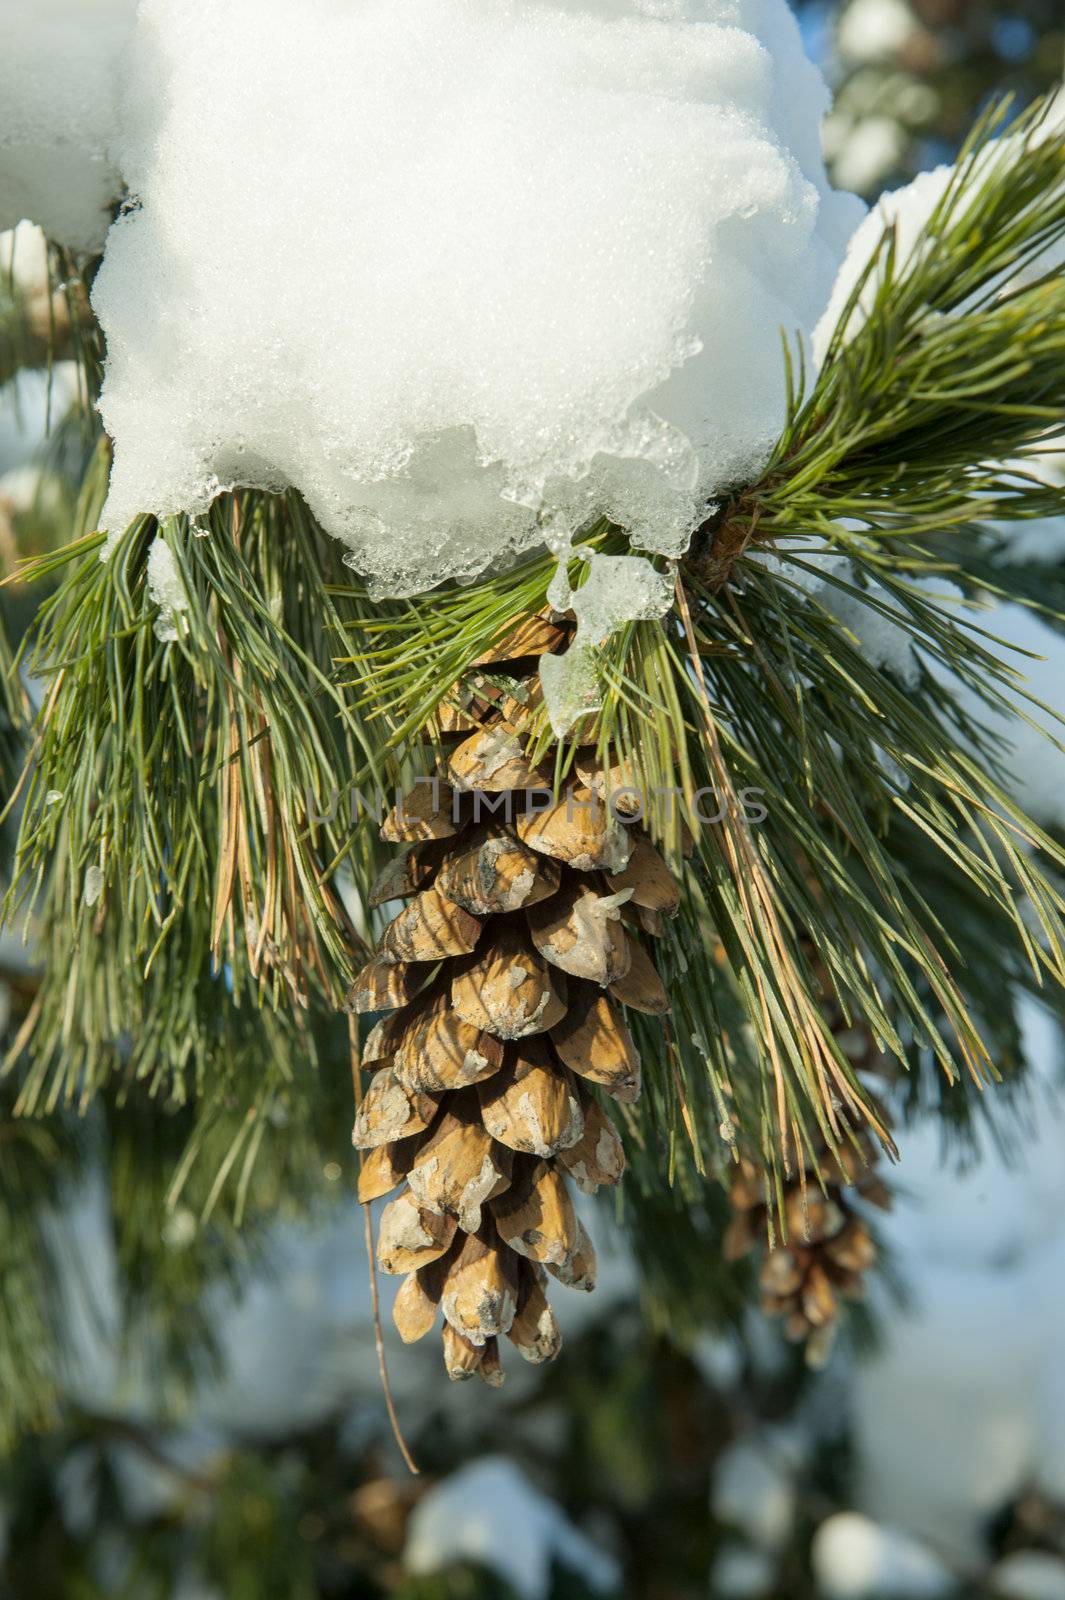 Fir cone in snow by Alenmax